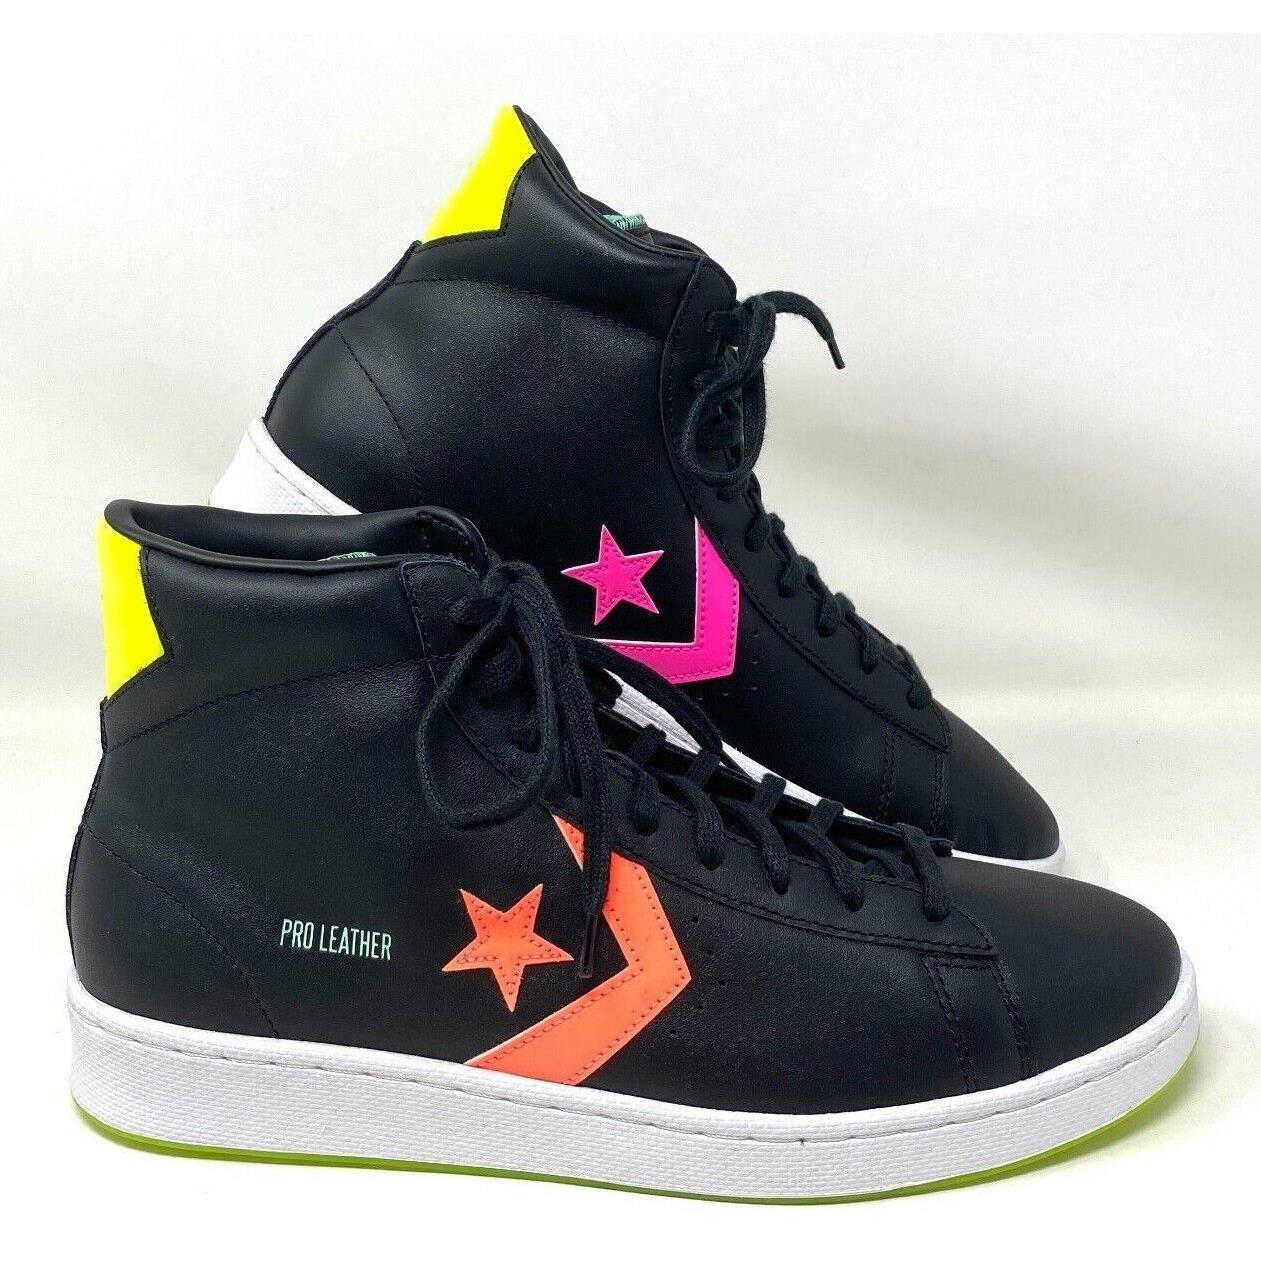 Converse Pro Leather Black Orange Yellow High Top Shoes Men`s Sneakers 169651C